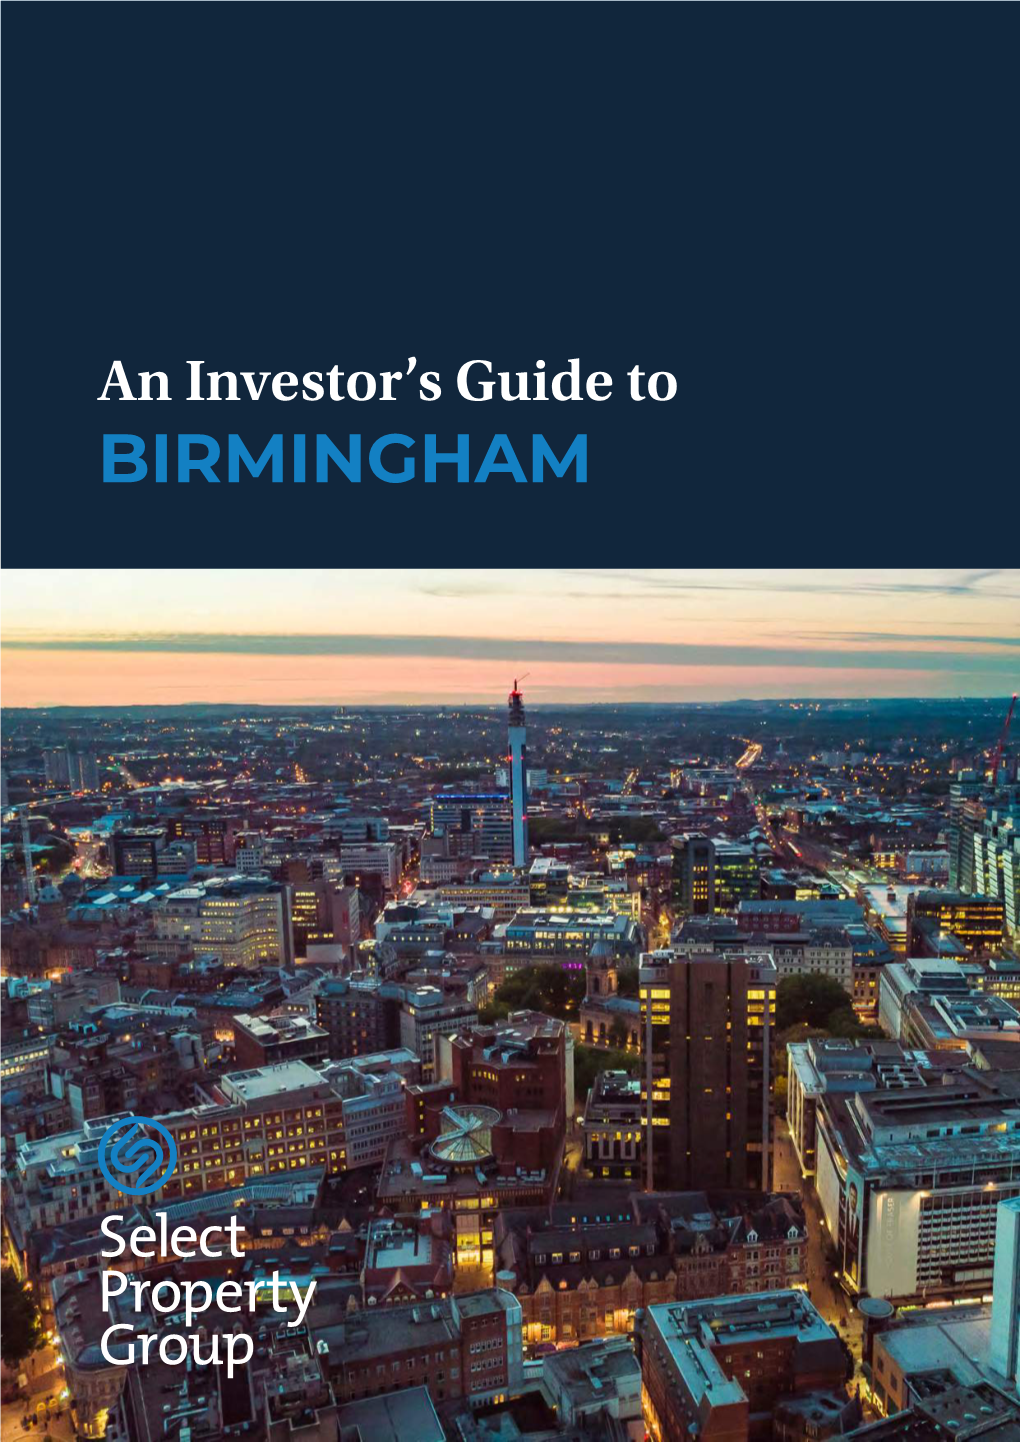 BIRMINGHAM a City Firmly on the Radar FAST FACTS: of Global Investors BIRMINGHAM